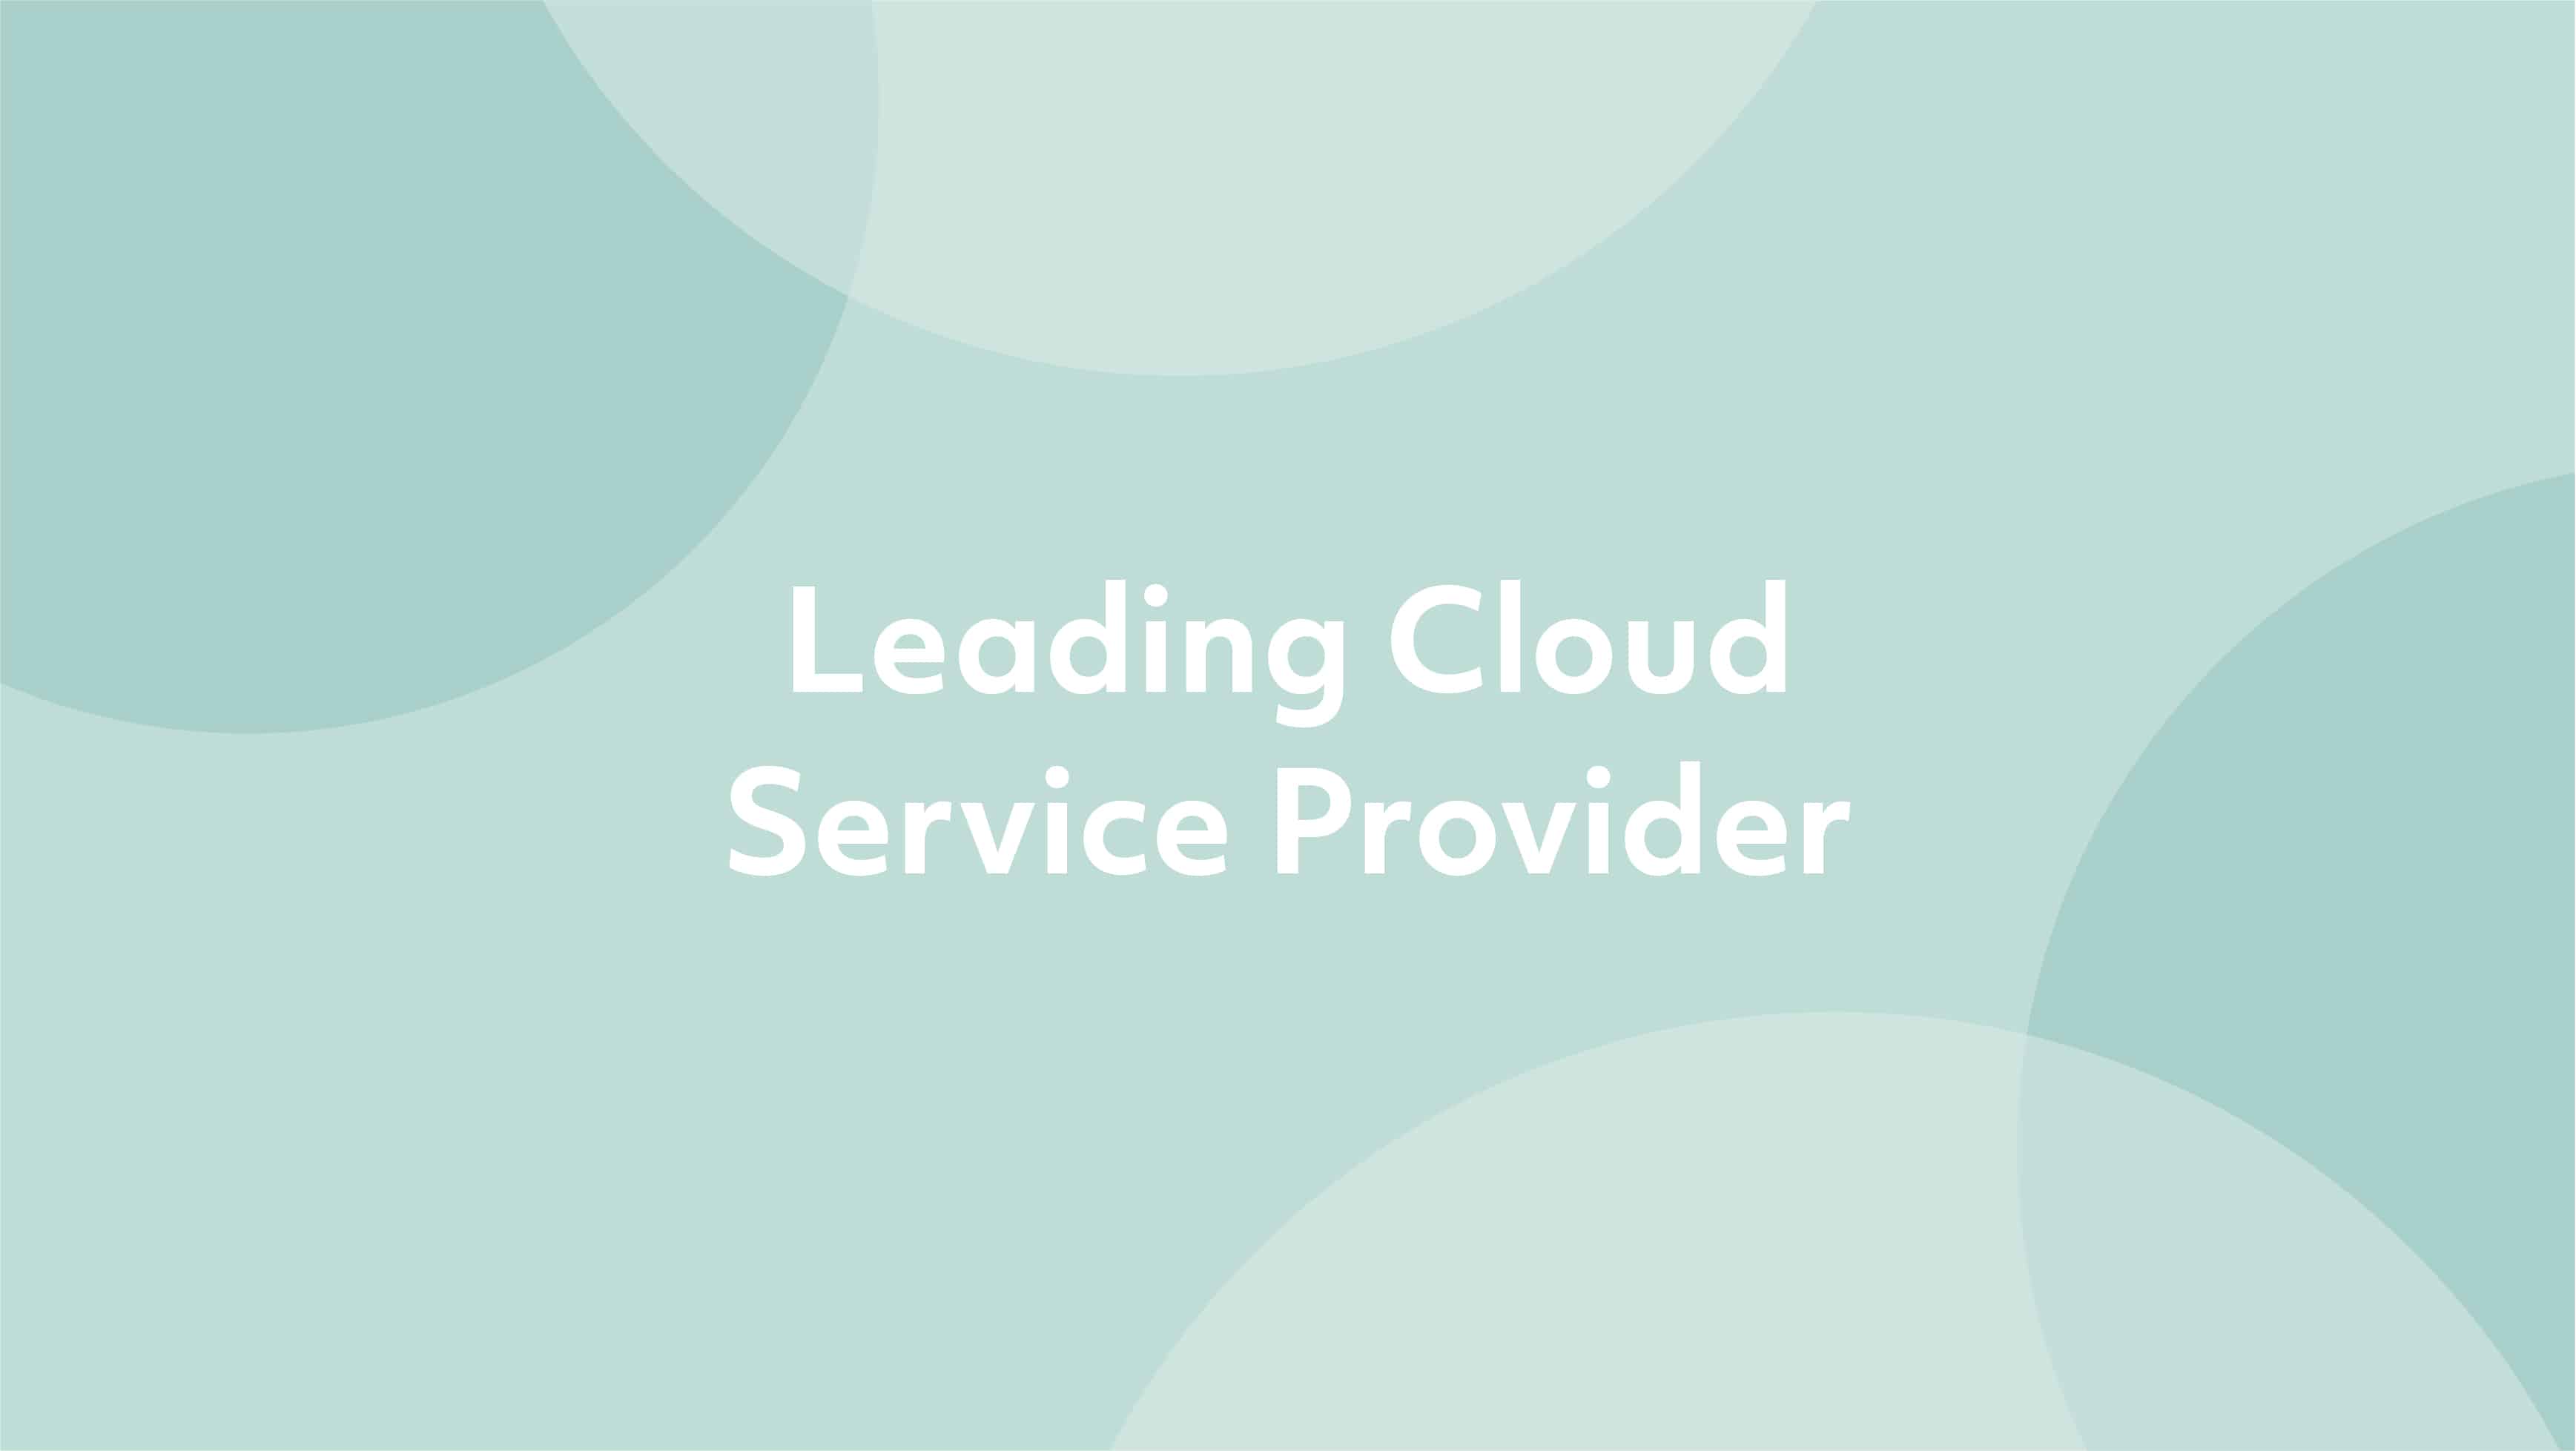  Leading Cloud Service Provider